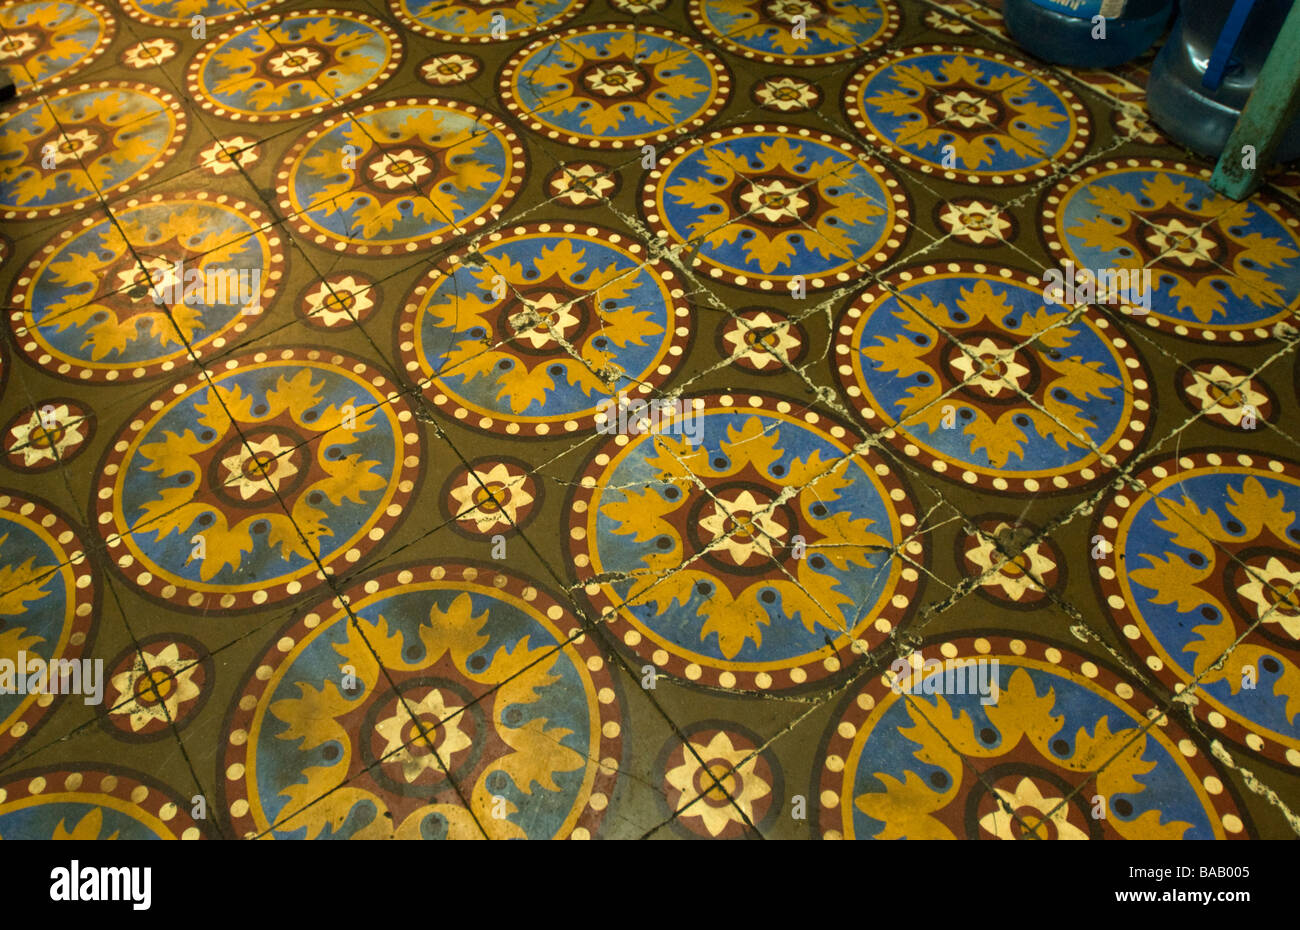 Puebla Mexico Old Linoleum Floor With Geometric Designs Stock